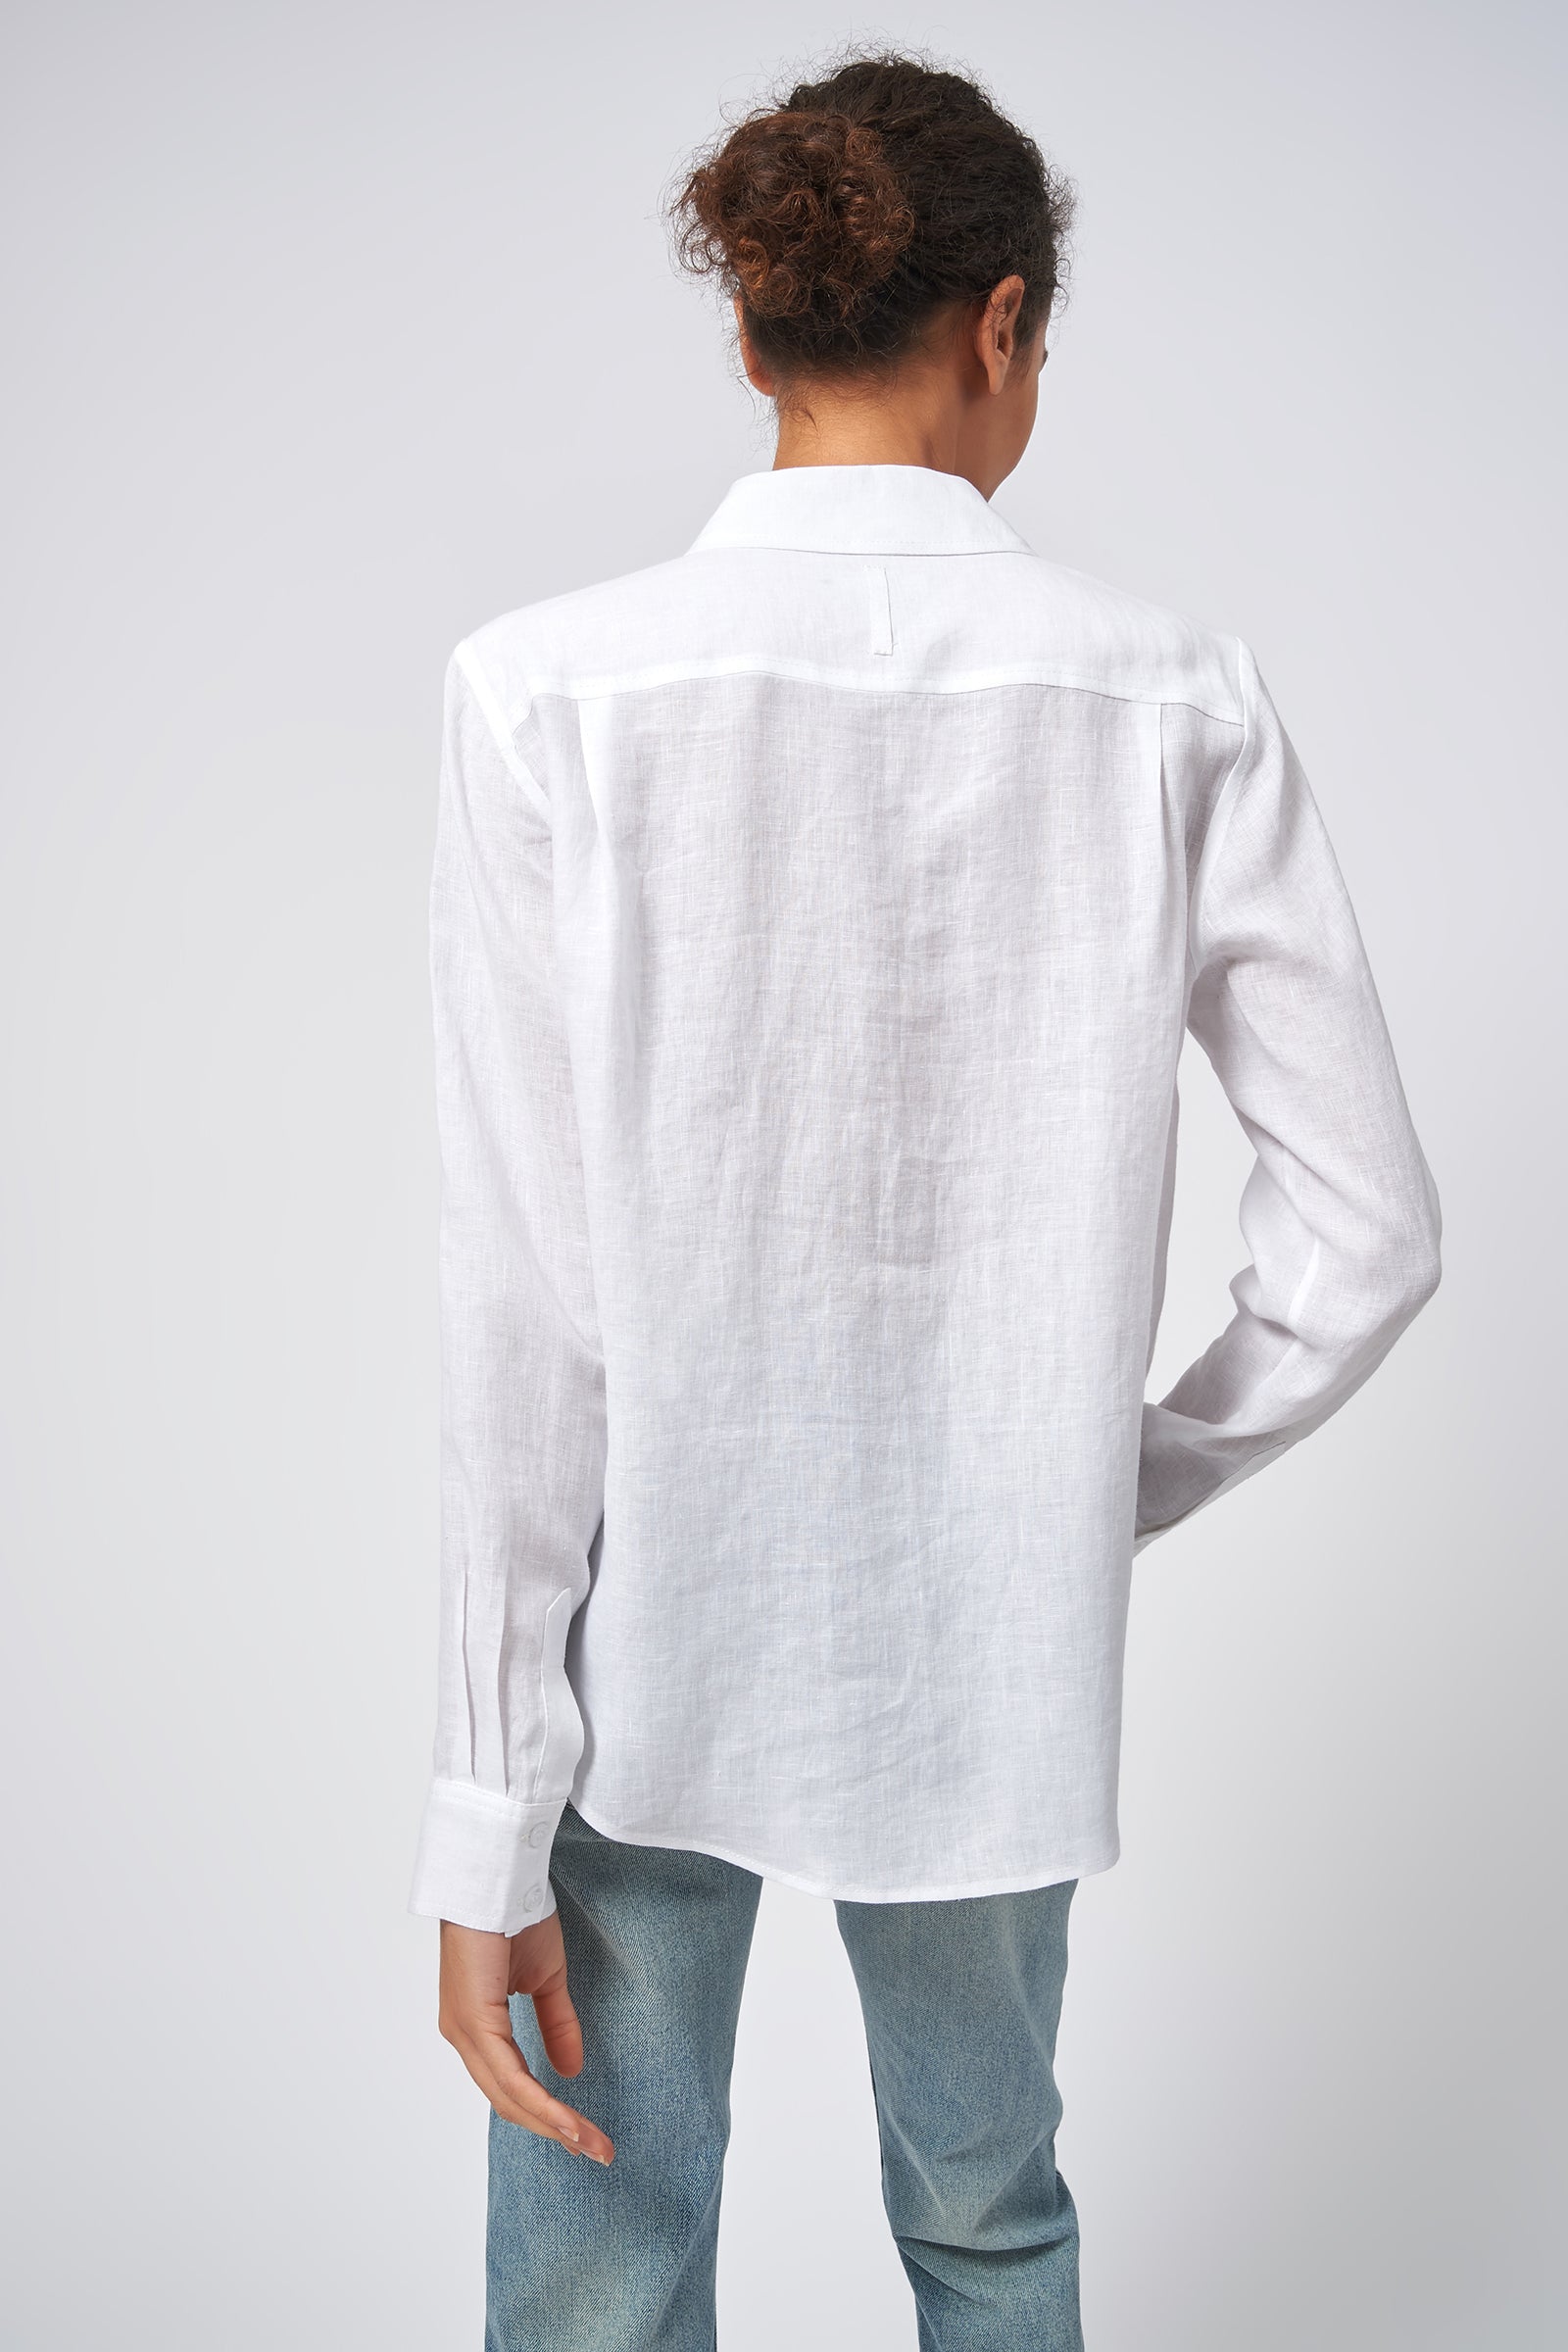 Kal Rieman Classic Tailored Shirt European Linen On Model White Back View